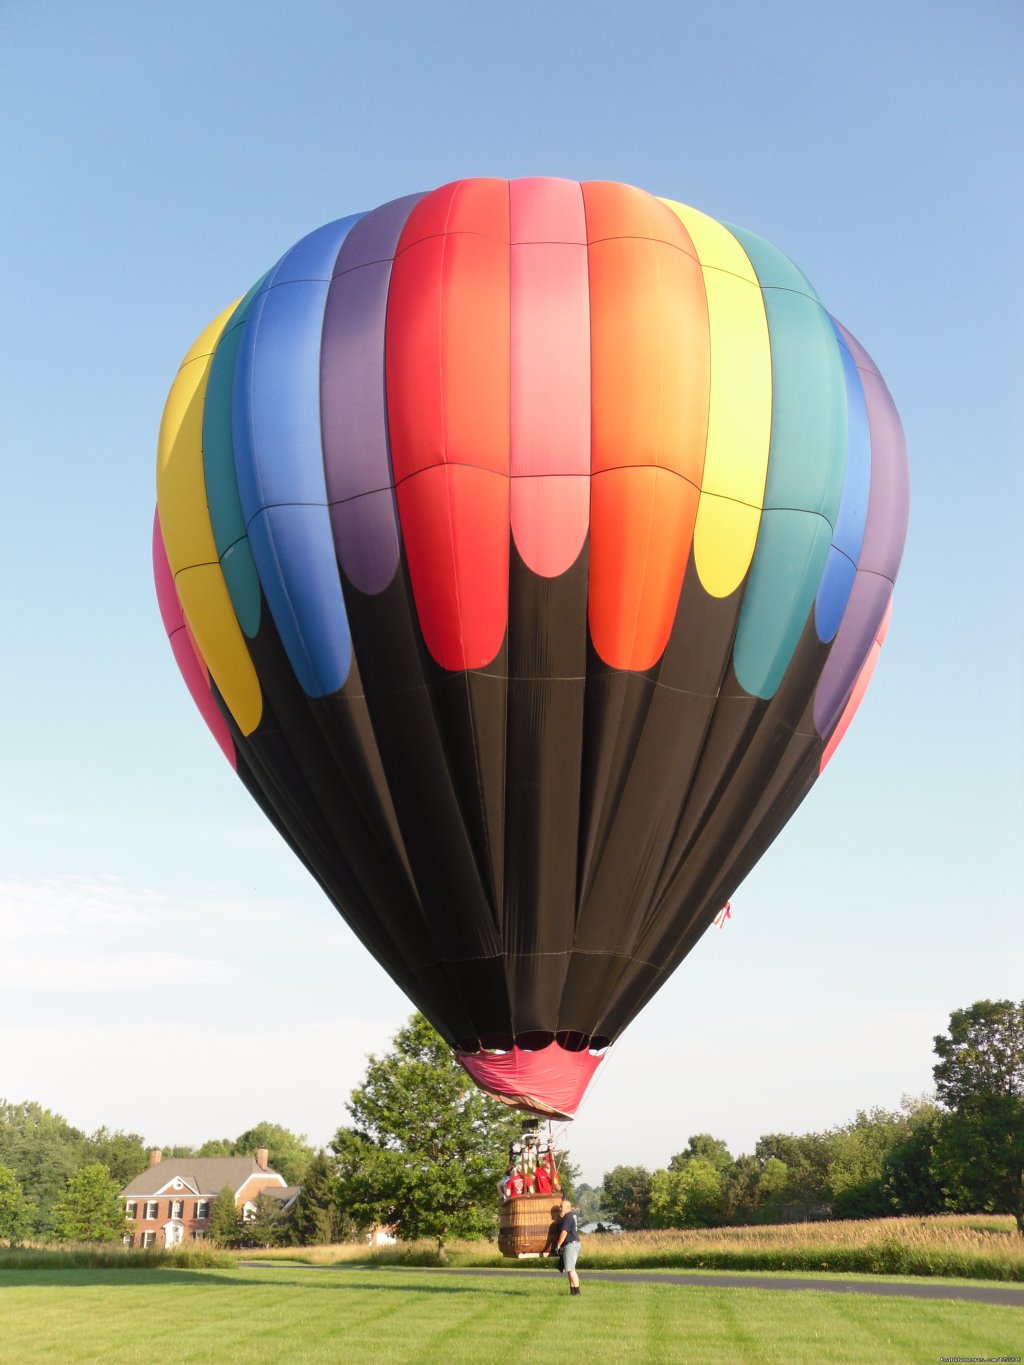 Hot Air Balloon Rides In Central Ohio | Columbus, Ohio  | Hot Air Ballooning | Image #1/3 | 